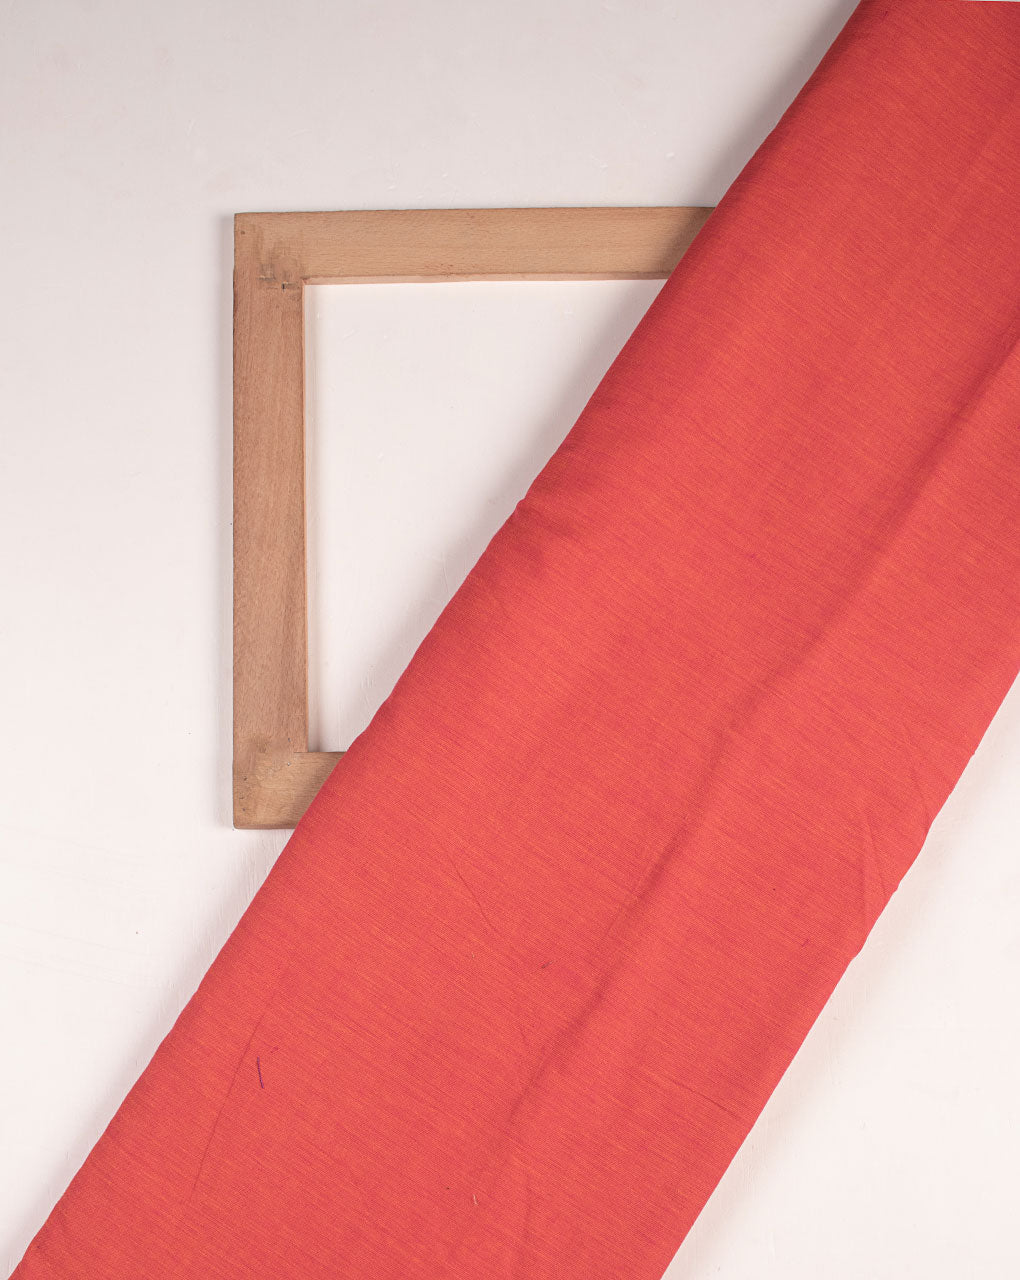 Crimson Red Mangalgiri Zari Border Loom Textured Cotton Fabric - Fabriclore.com